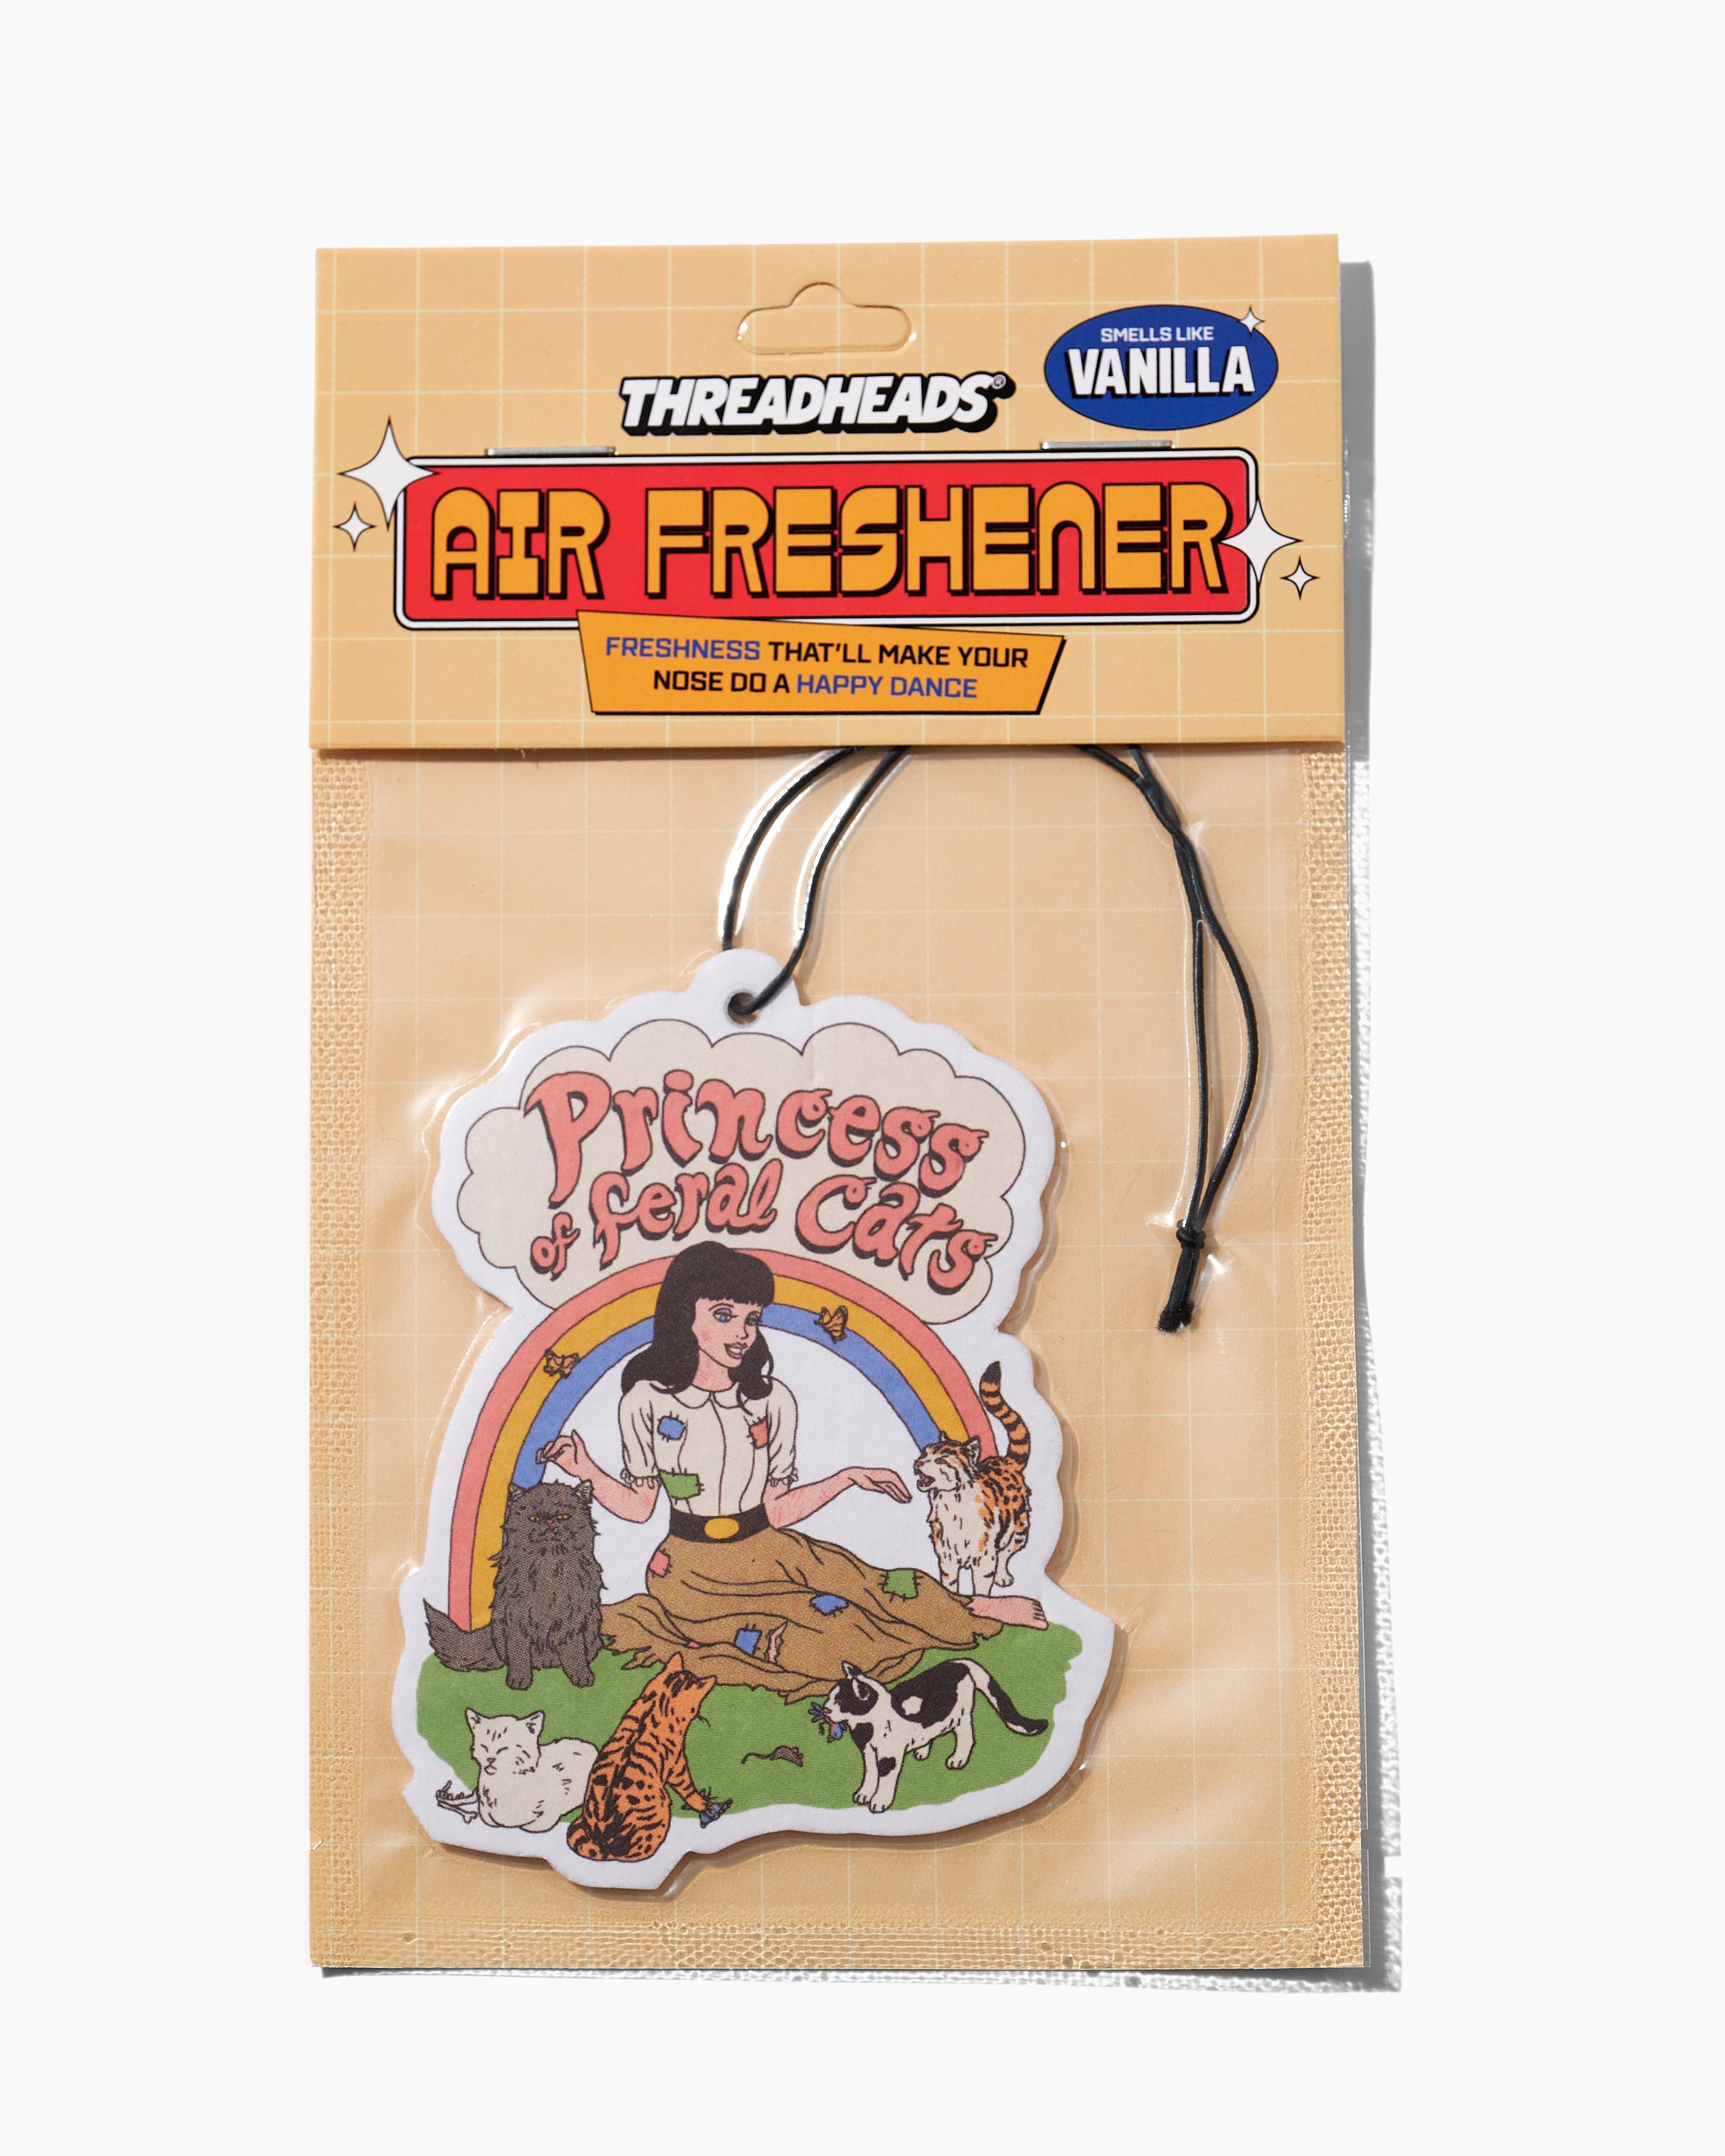 Princess of Feral Cats Air Freshener